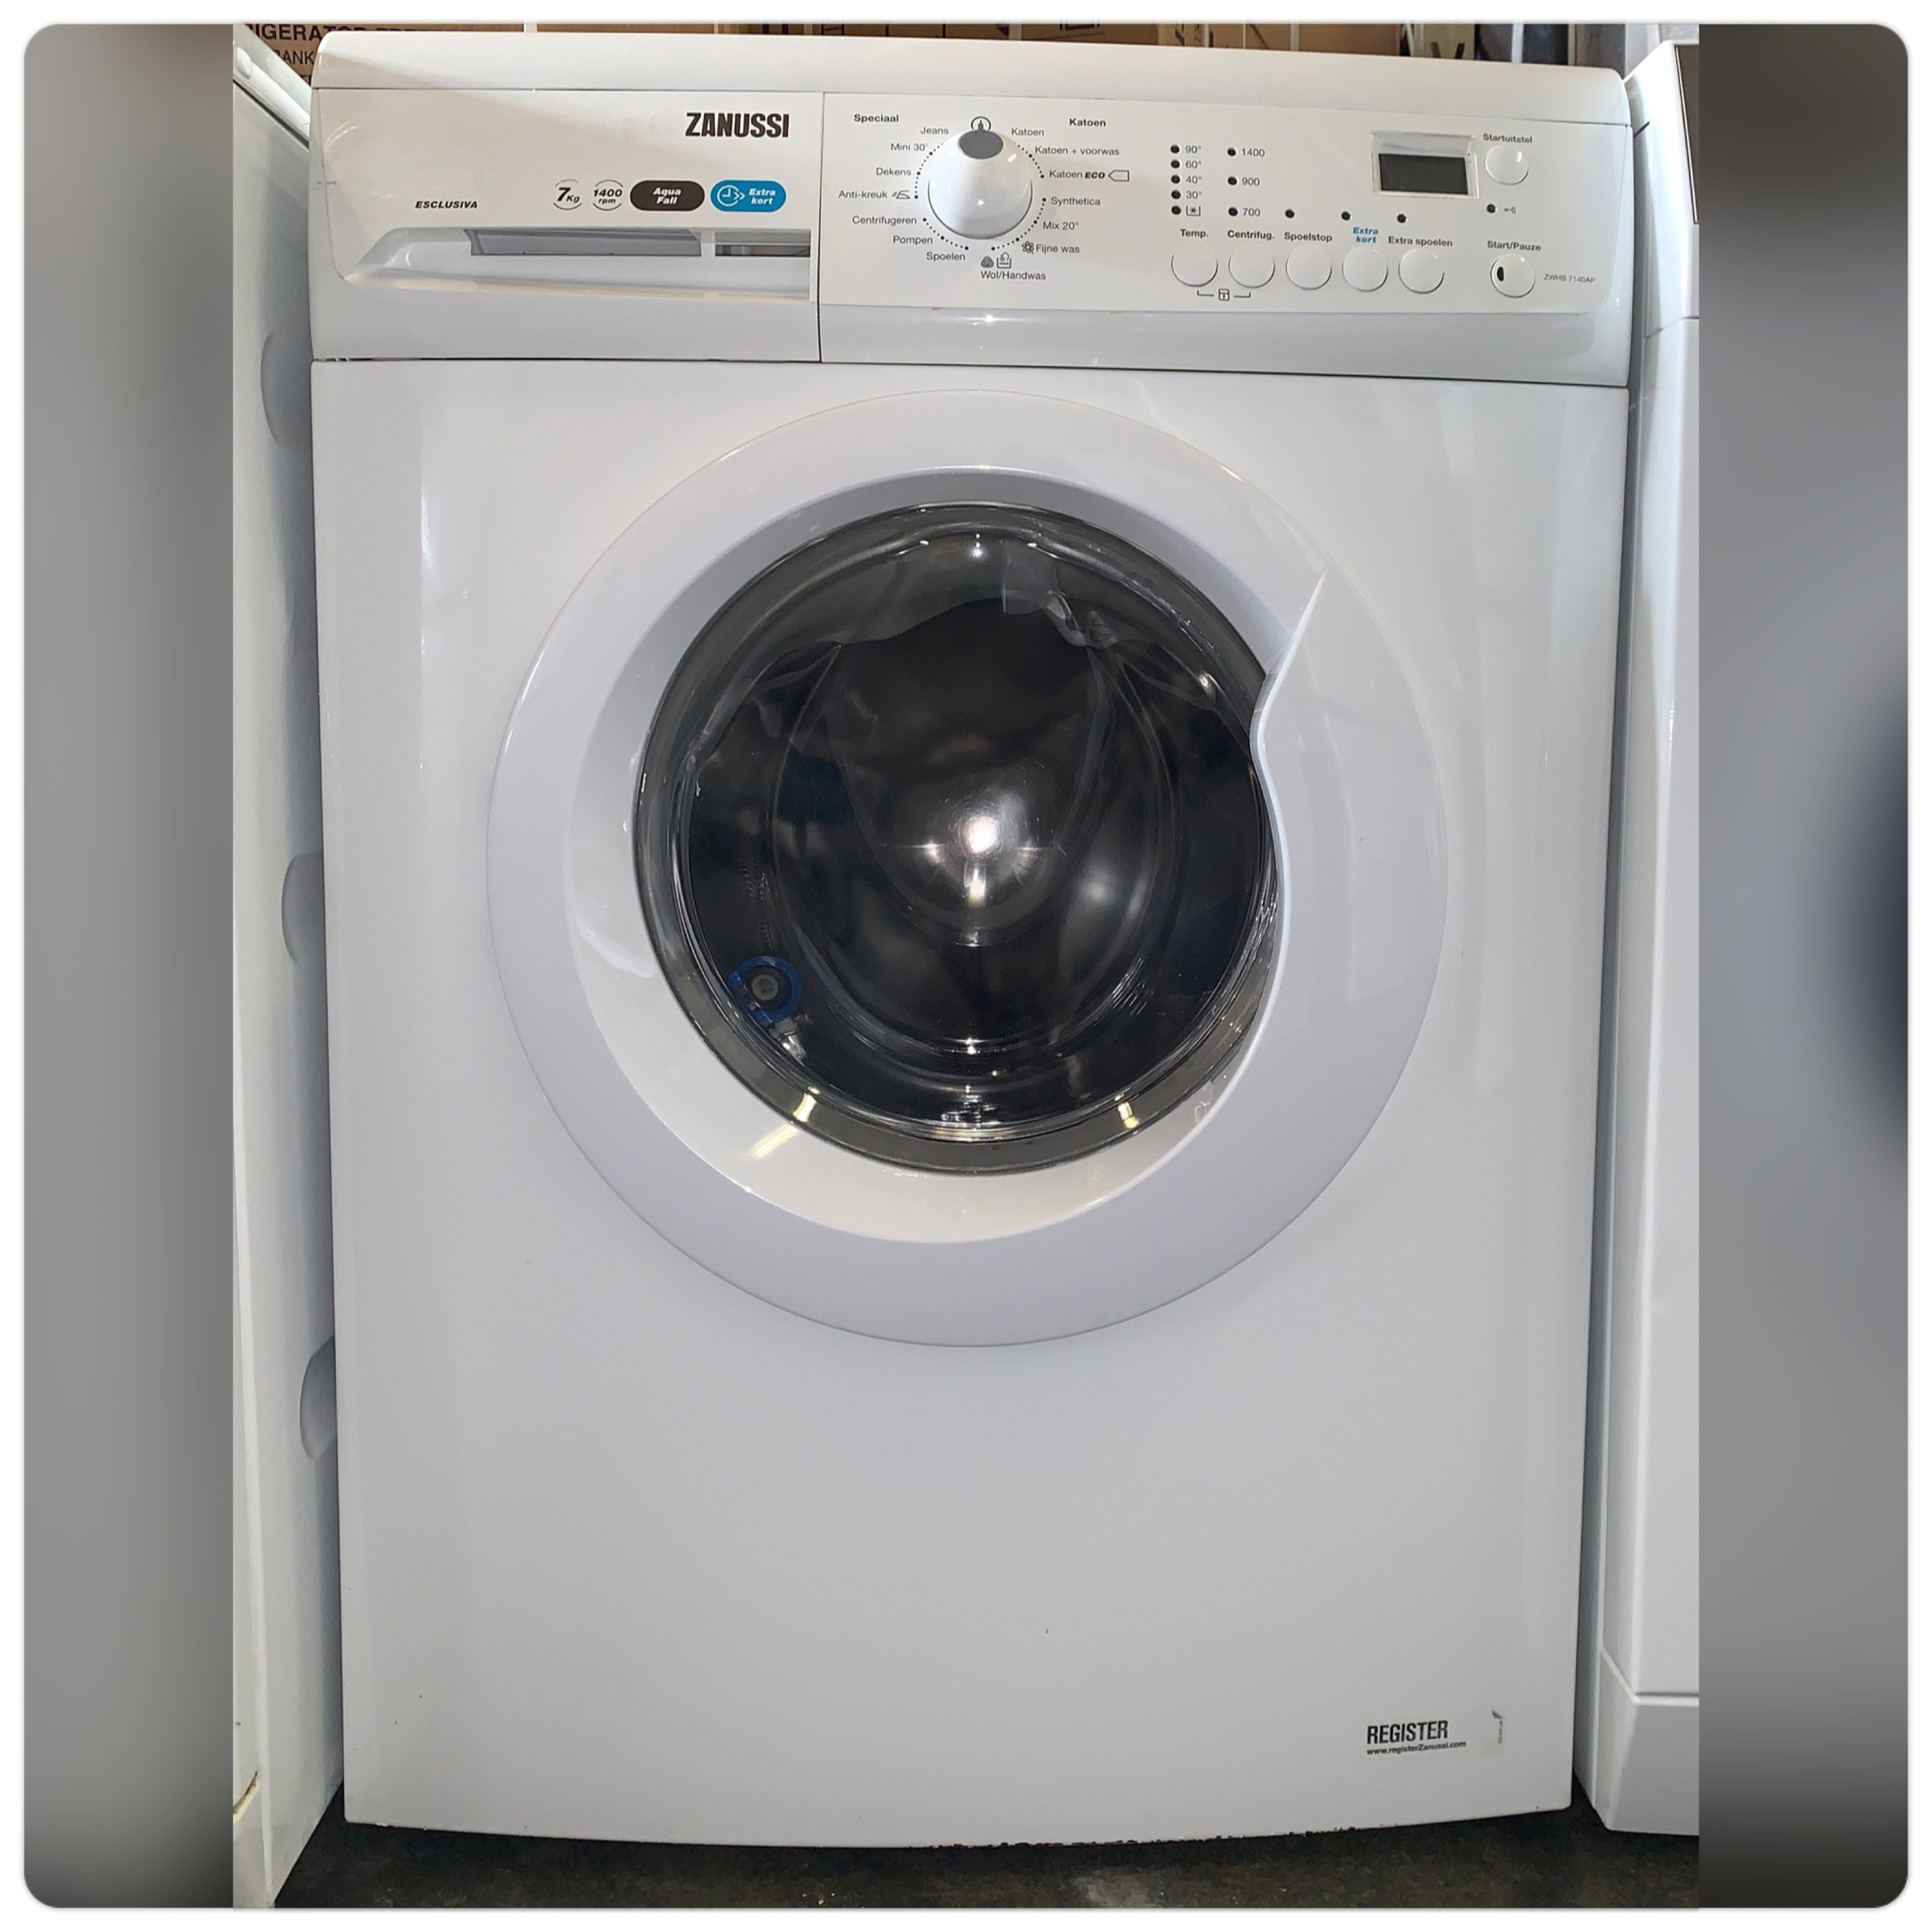 Internationale Tips Verstrikking Wasmachine ZANUSSI 7kg A++ ZWHB7140 €229,- Apparaten.nl -Altijd goedkoper!